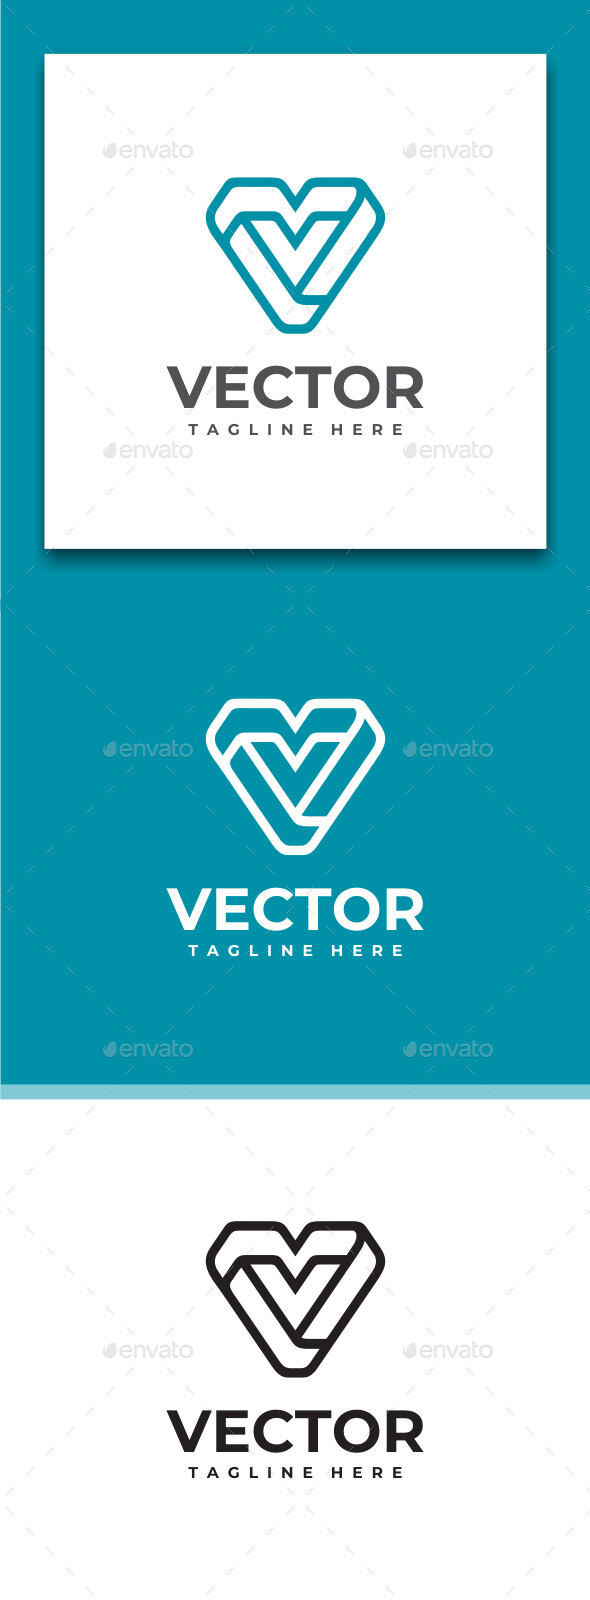 Vector - Abstract Letter V Logo Design